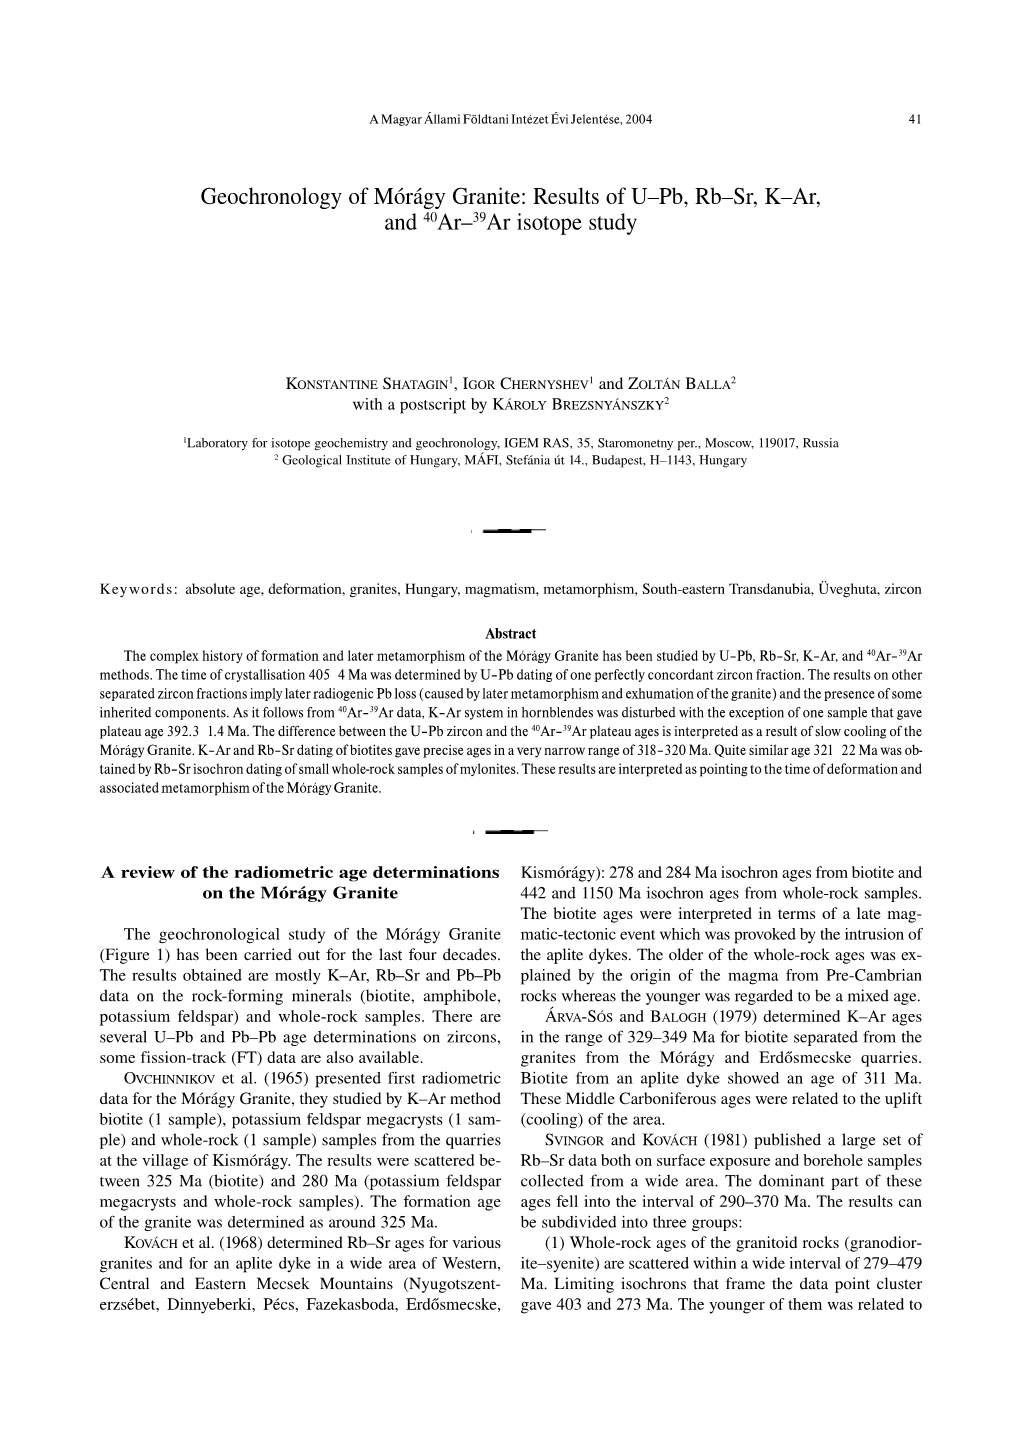 Geochronology of Mórágy Granite: Results of U–Pb, Rb–Sr, K–Ar, and 40Ar–39Ar Isotope Study